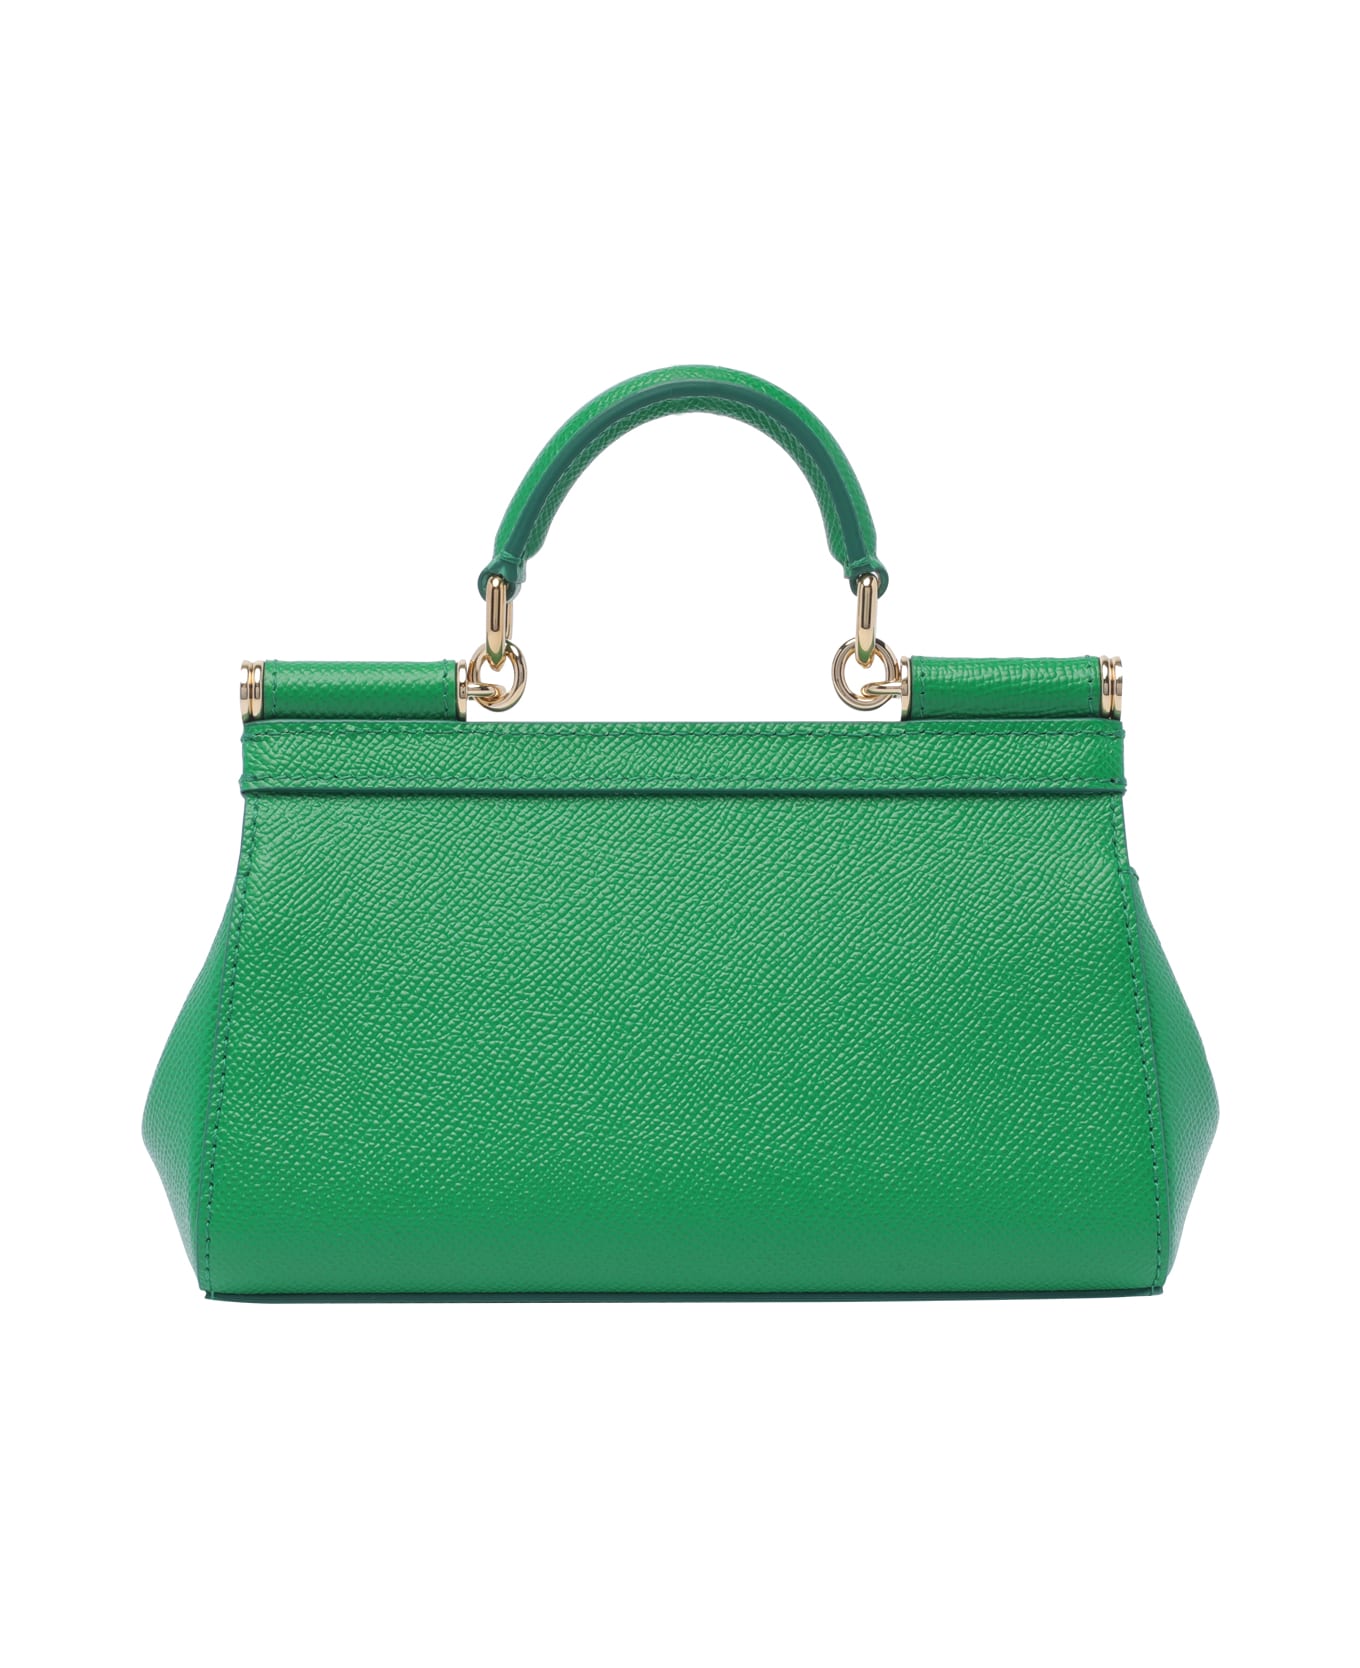 Dolce & Gabbana Sicily Small Handbag - Green